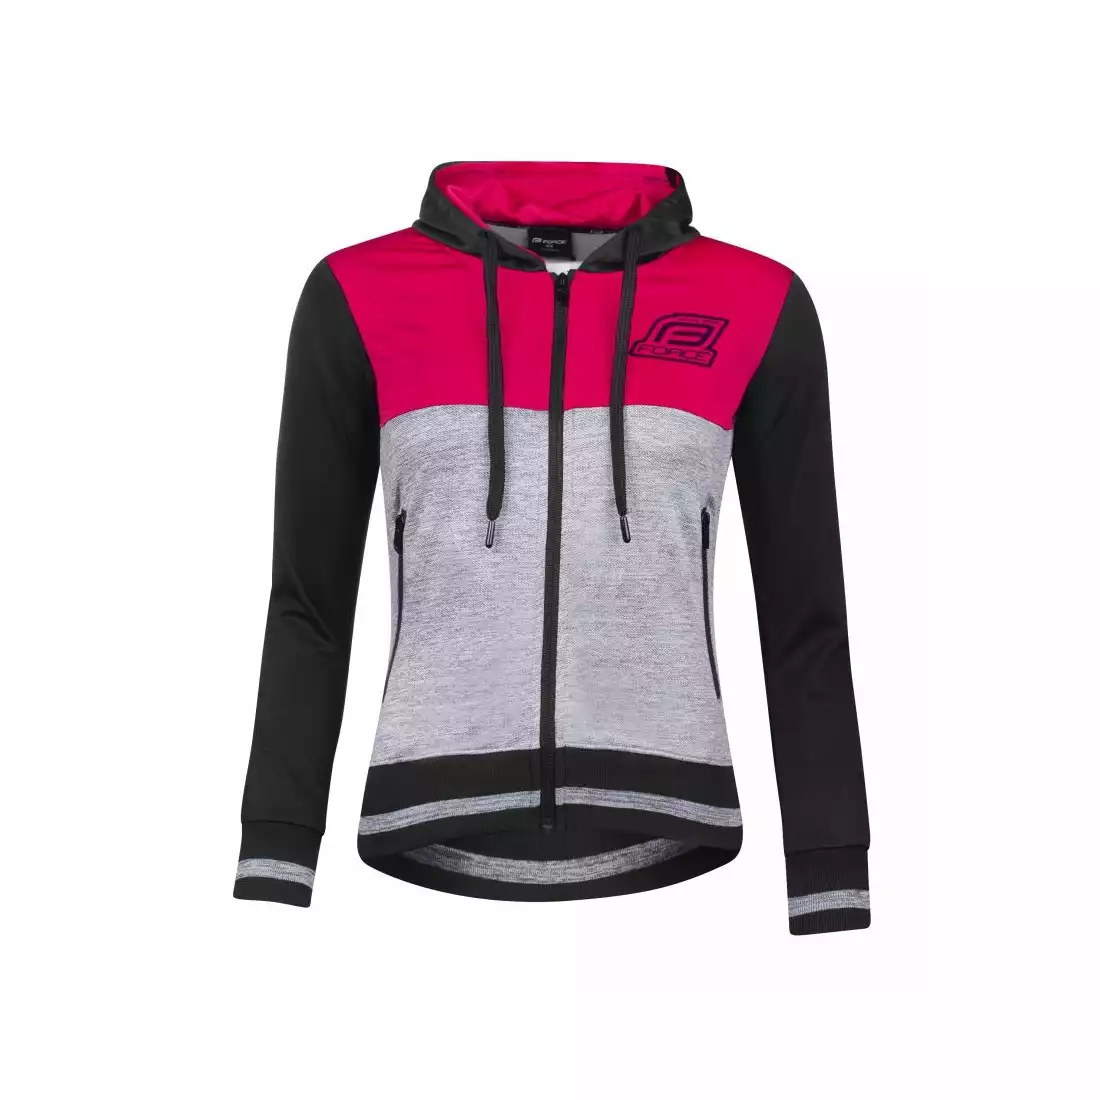 FORCE ADRIANA women's sports sweatshirt, black and pink